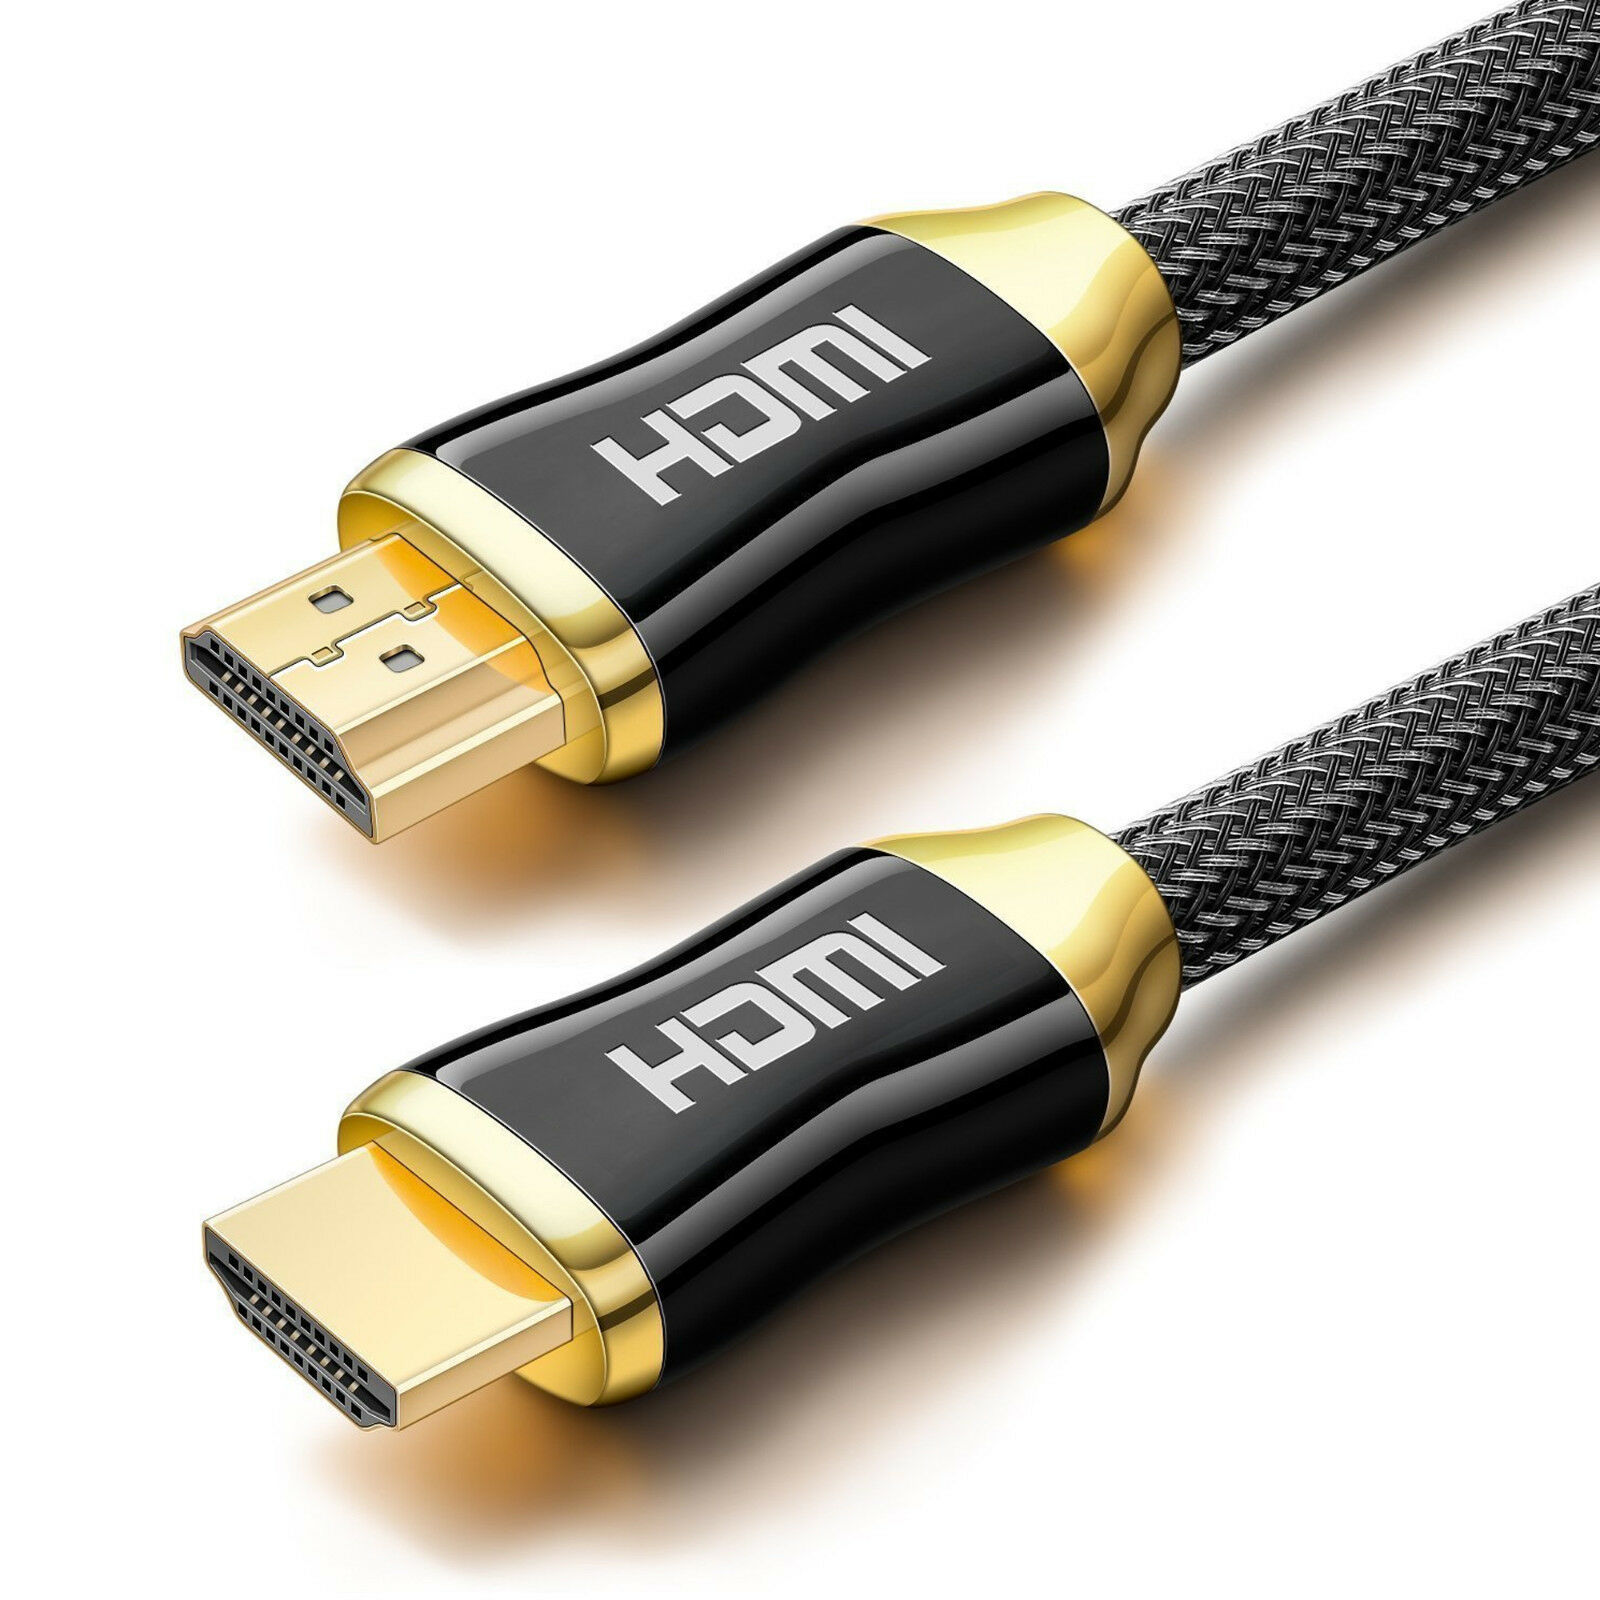 PREMIUM ULTRAHD HDMI CABLE HIGH SPEED 4K 2160p 3D LEAD 1m/2m/3m/4m/5m/7m/10m/15m 